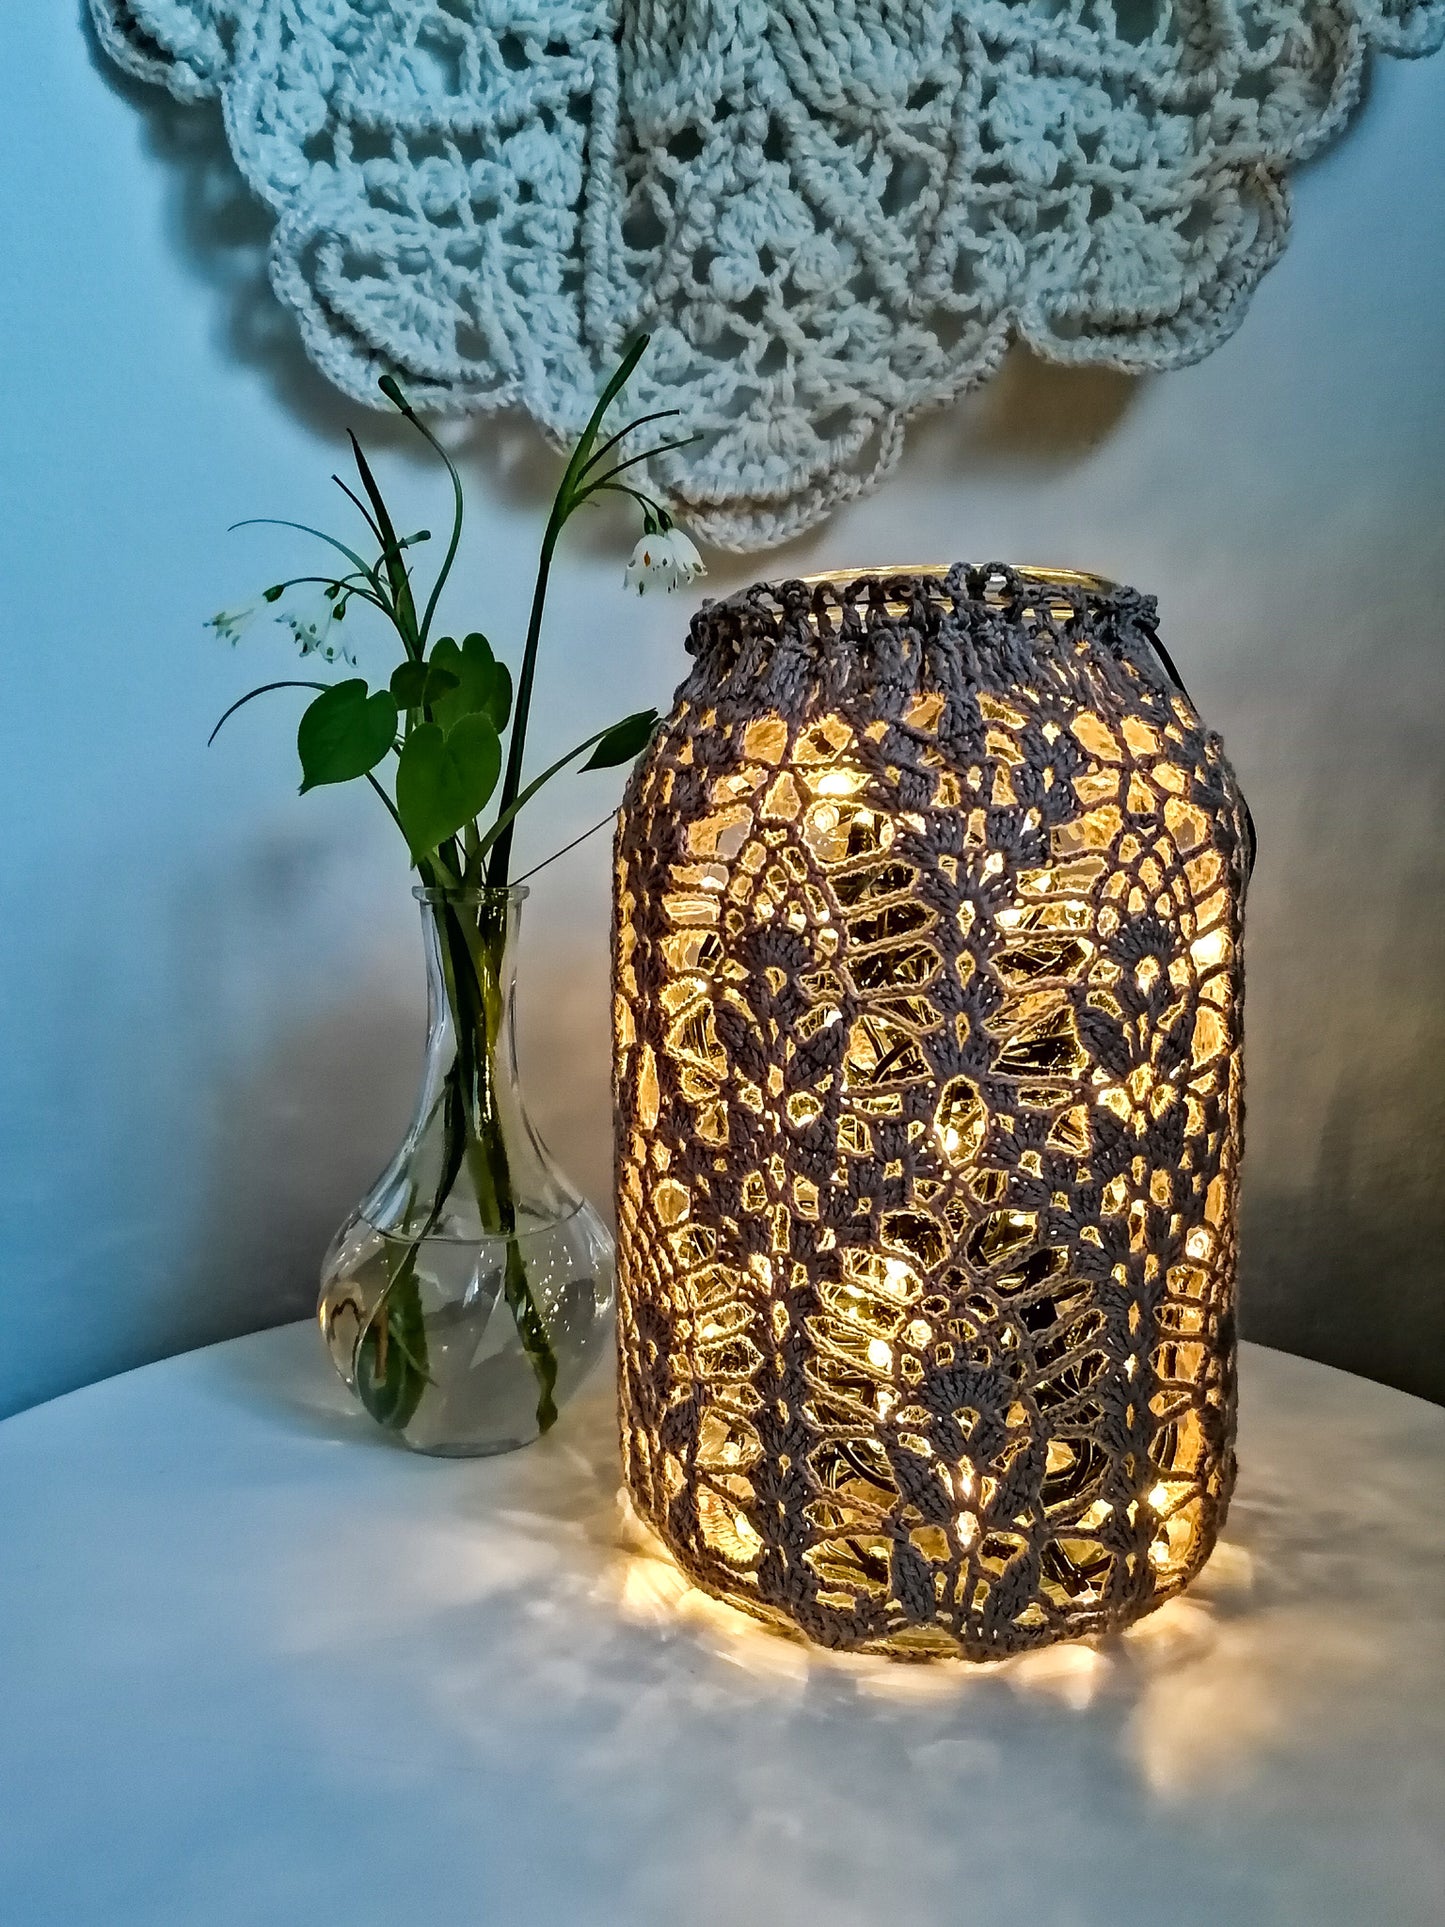 Giant lacy lantern or vase